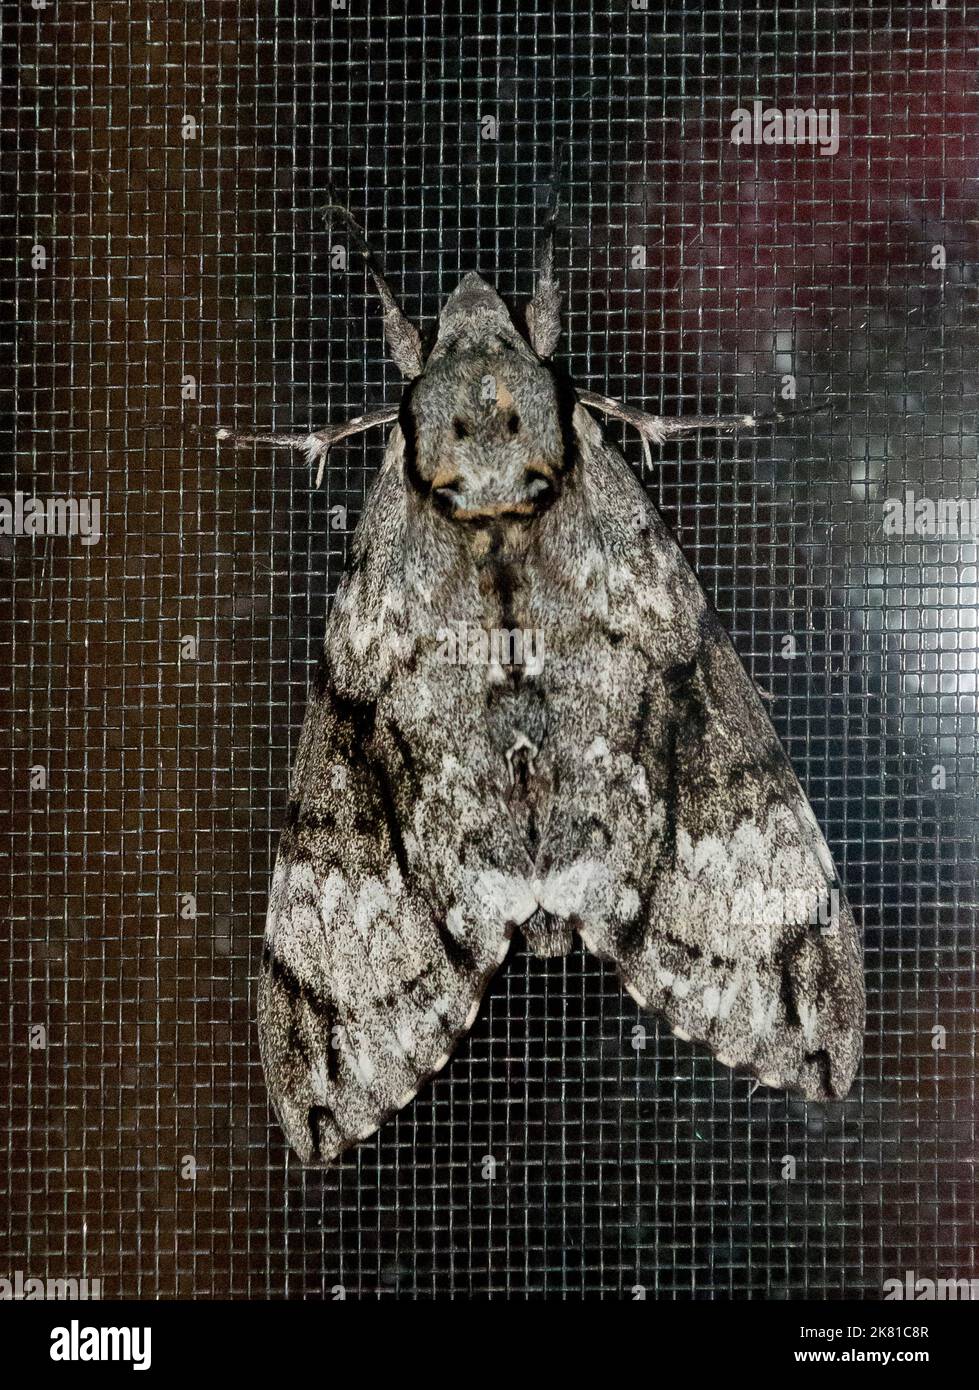 Common Australian Privet Hawk moth, psilogramma menephron, with intricate monotone markings. Stock Photo